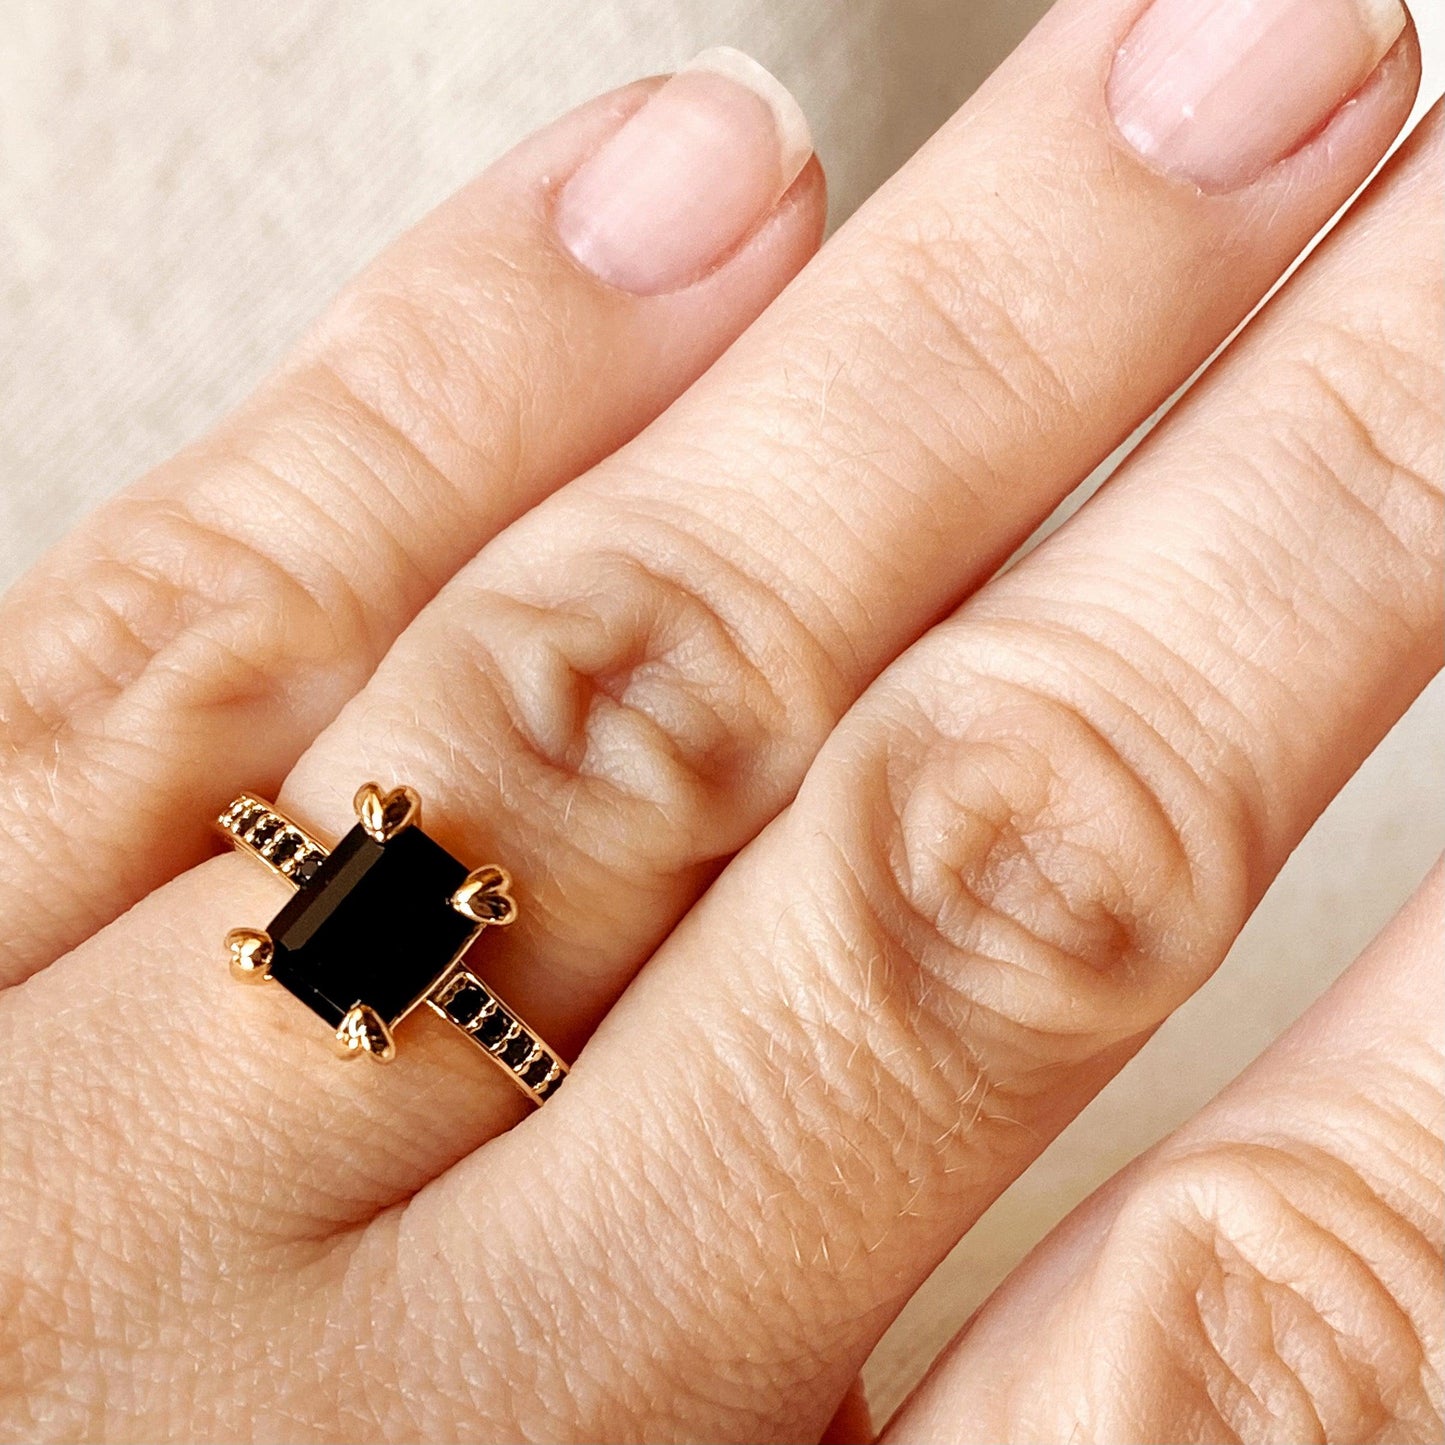 GoldFi 18k Gold Filled Black Solitaire Ring